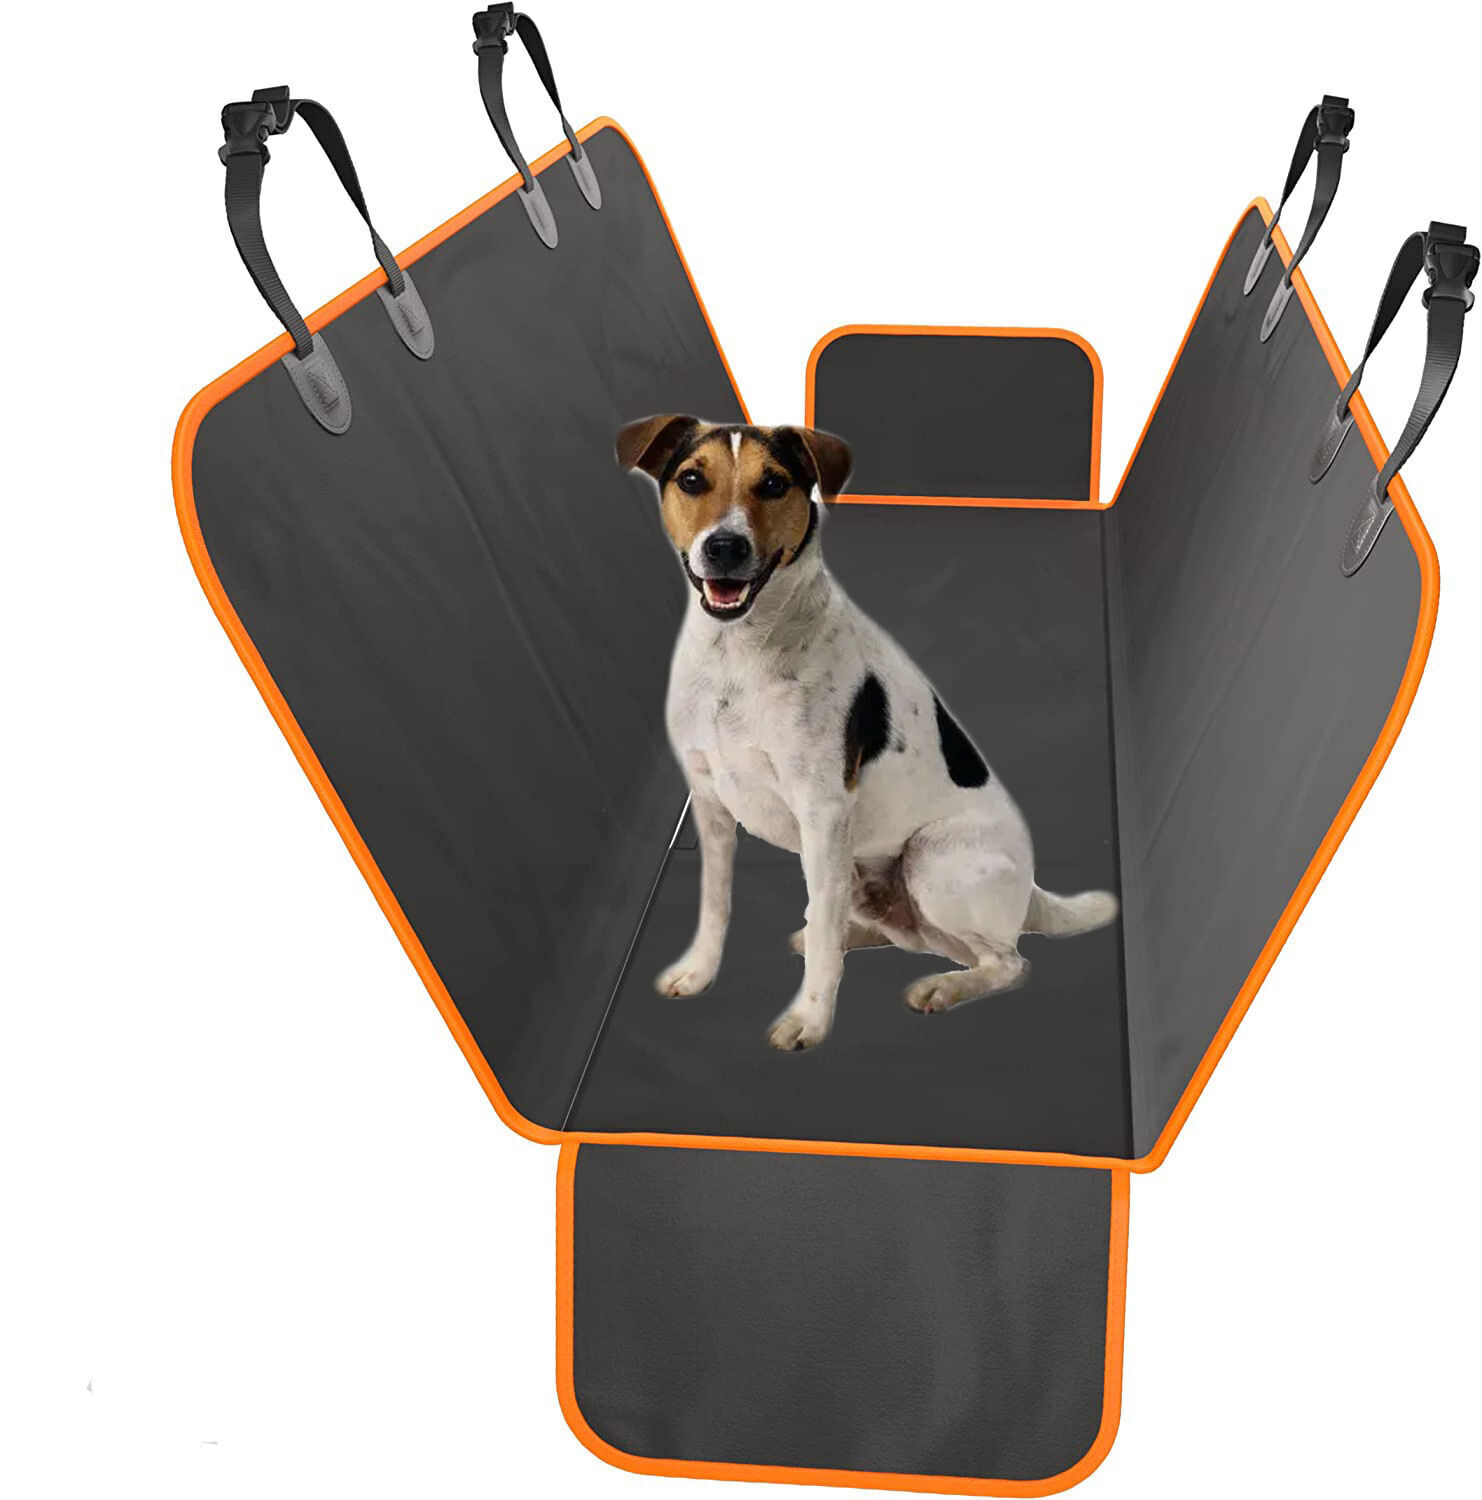 Protector de asiento trasero para perro, impermeable, a prueba de arañazos,  antideslizante, hamaca para perros, protección de asiento trasero contra